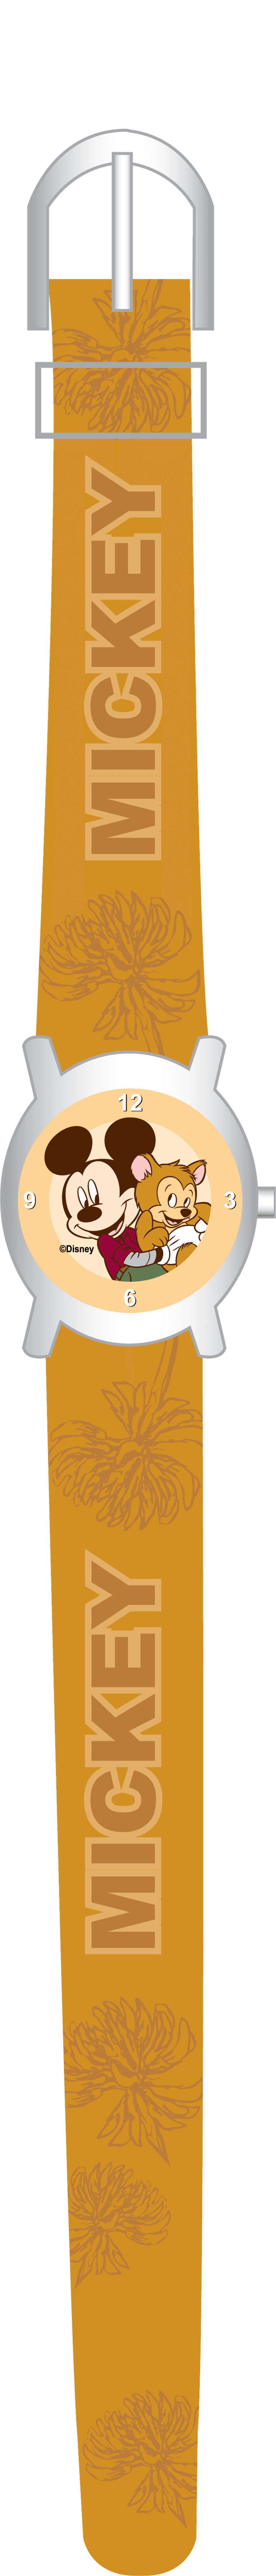 watch mickey mouse cartoon series vector